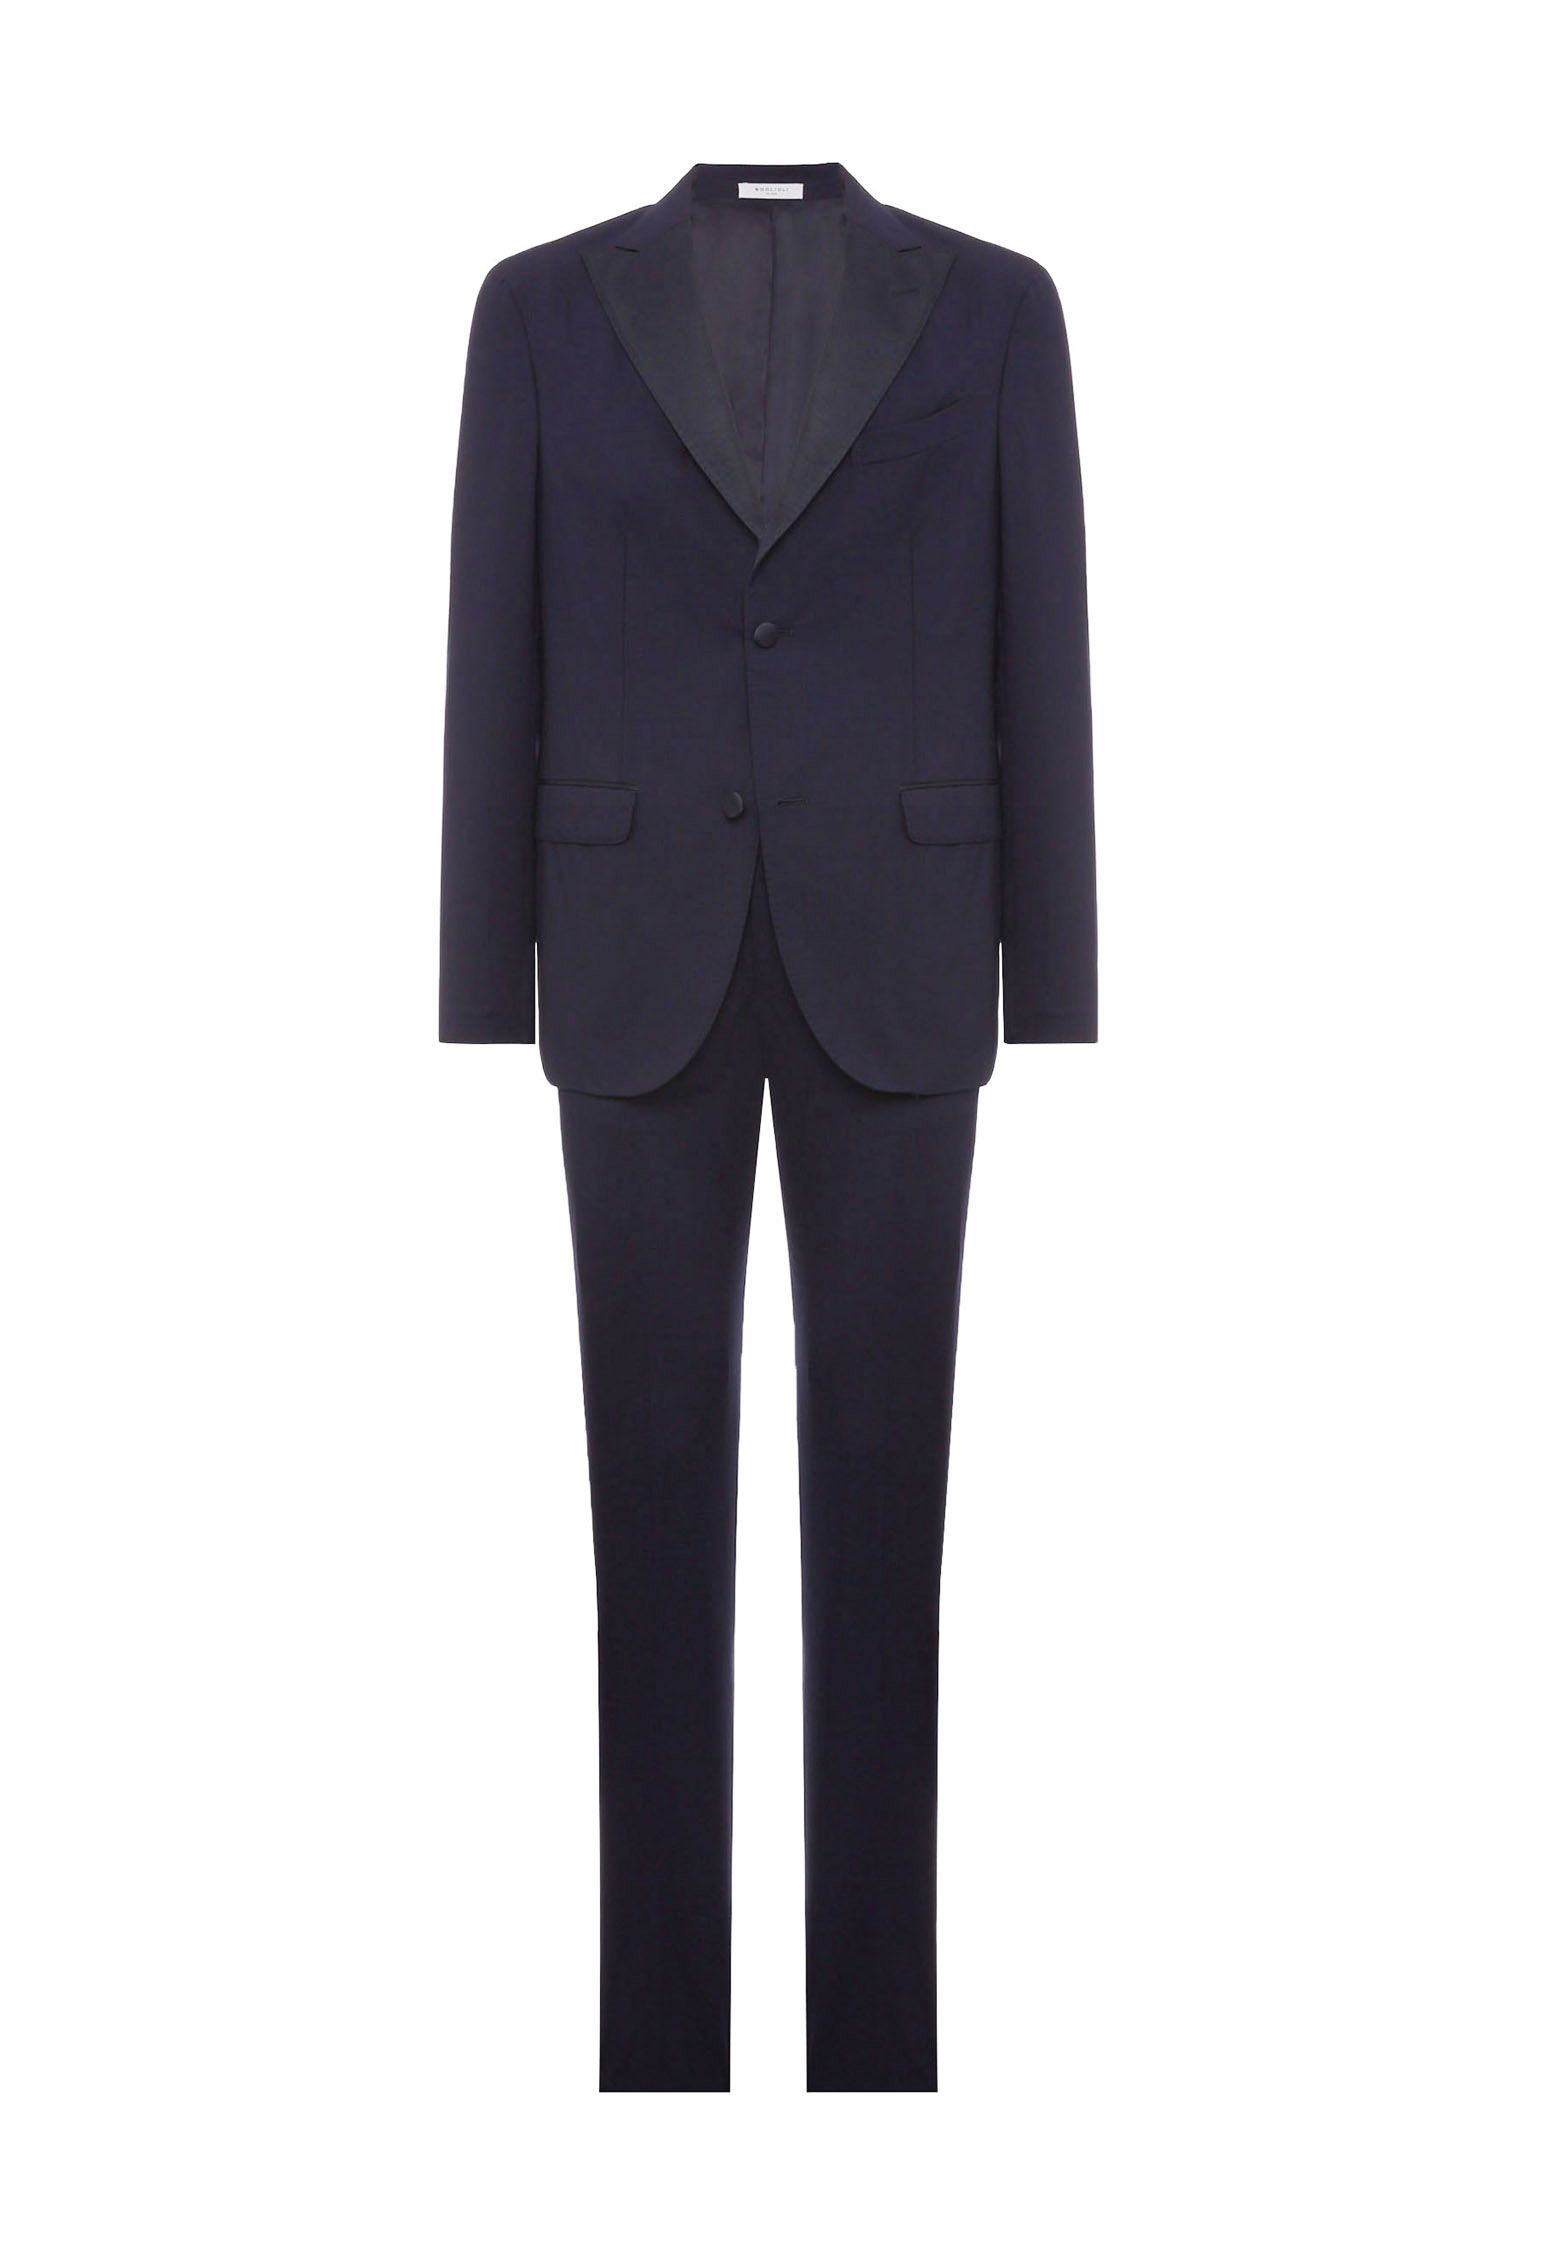 Boglioli Dark Blue 100% Virgin Wool Tuxedo K-jacket Suit In Dark Blue Color